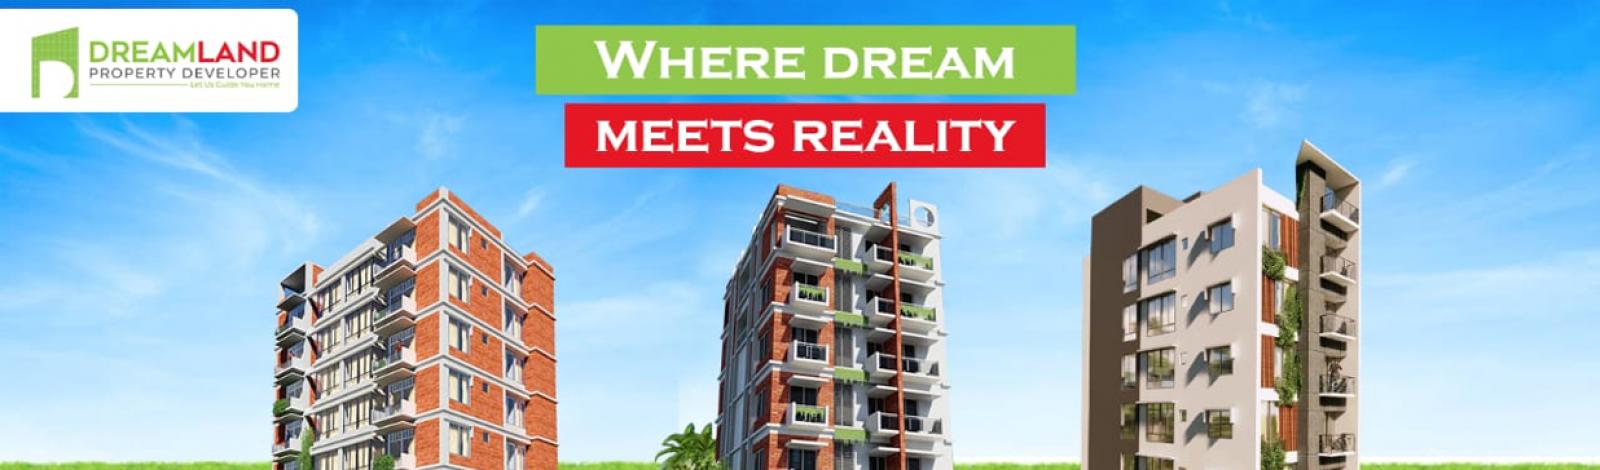 Dreamland Property Developer banner